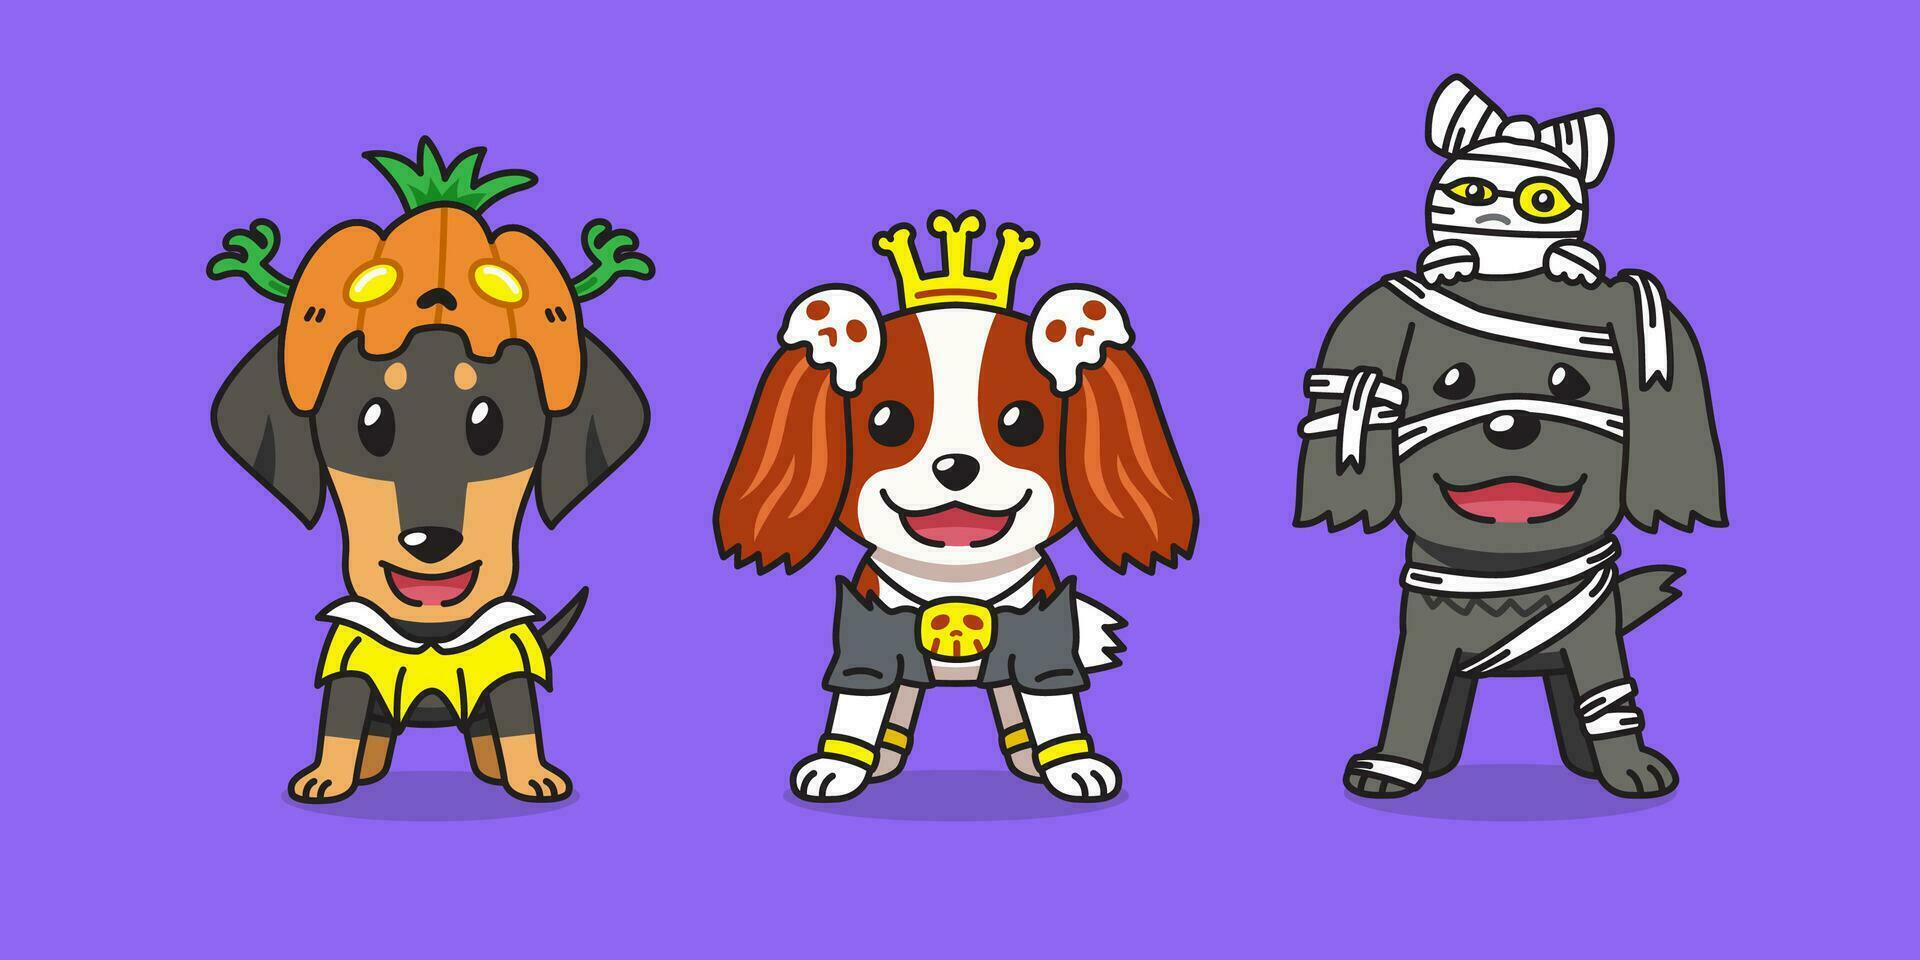 Vektor Karikatur süß Hunde mit Halloween Kostüme